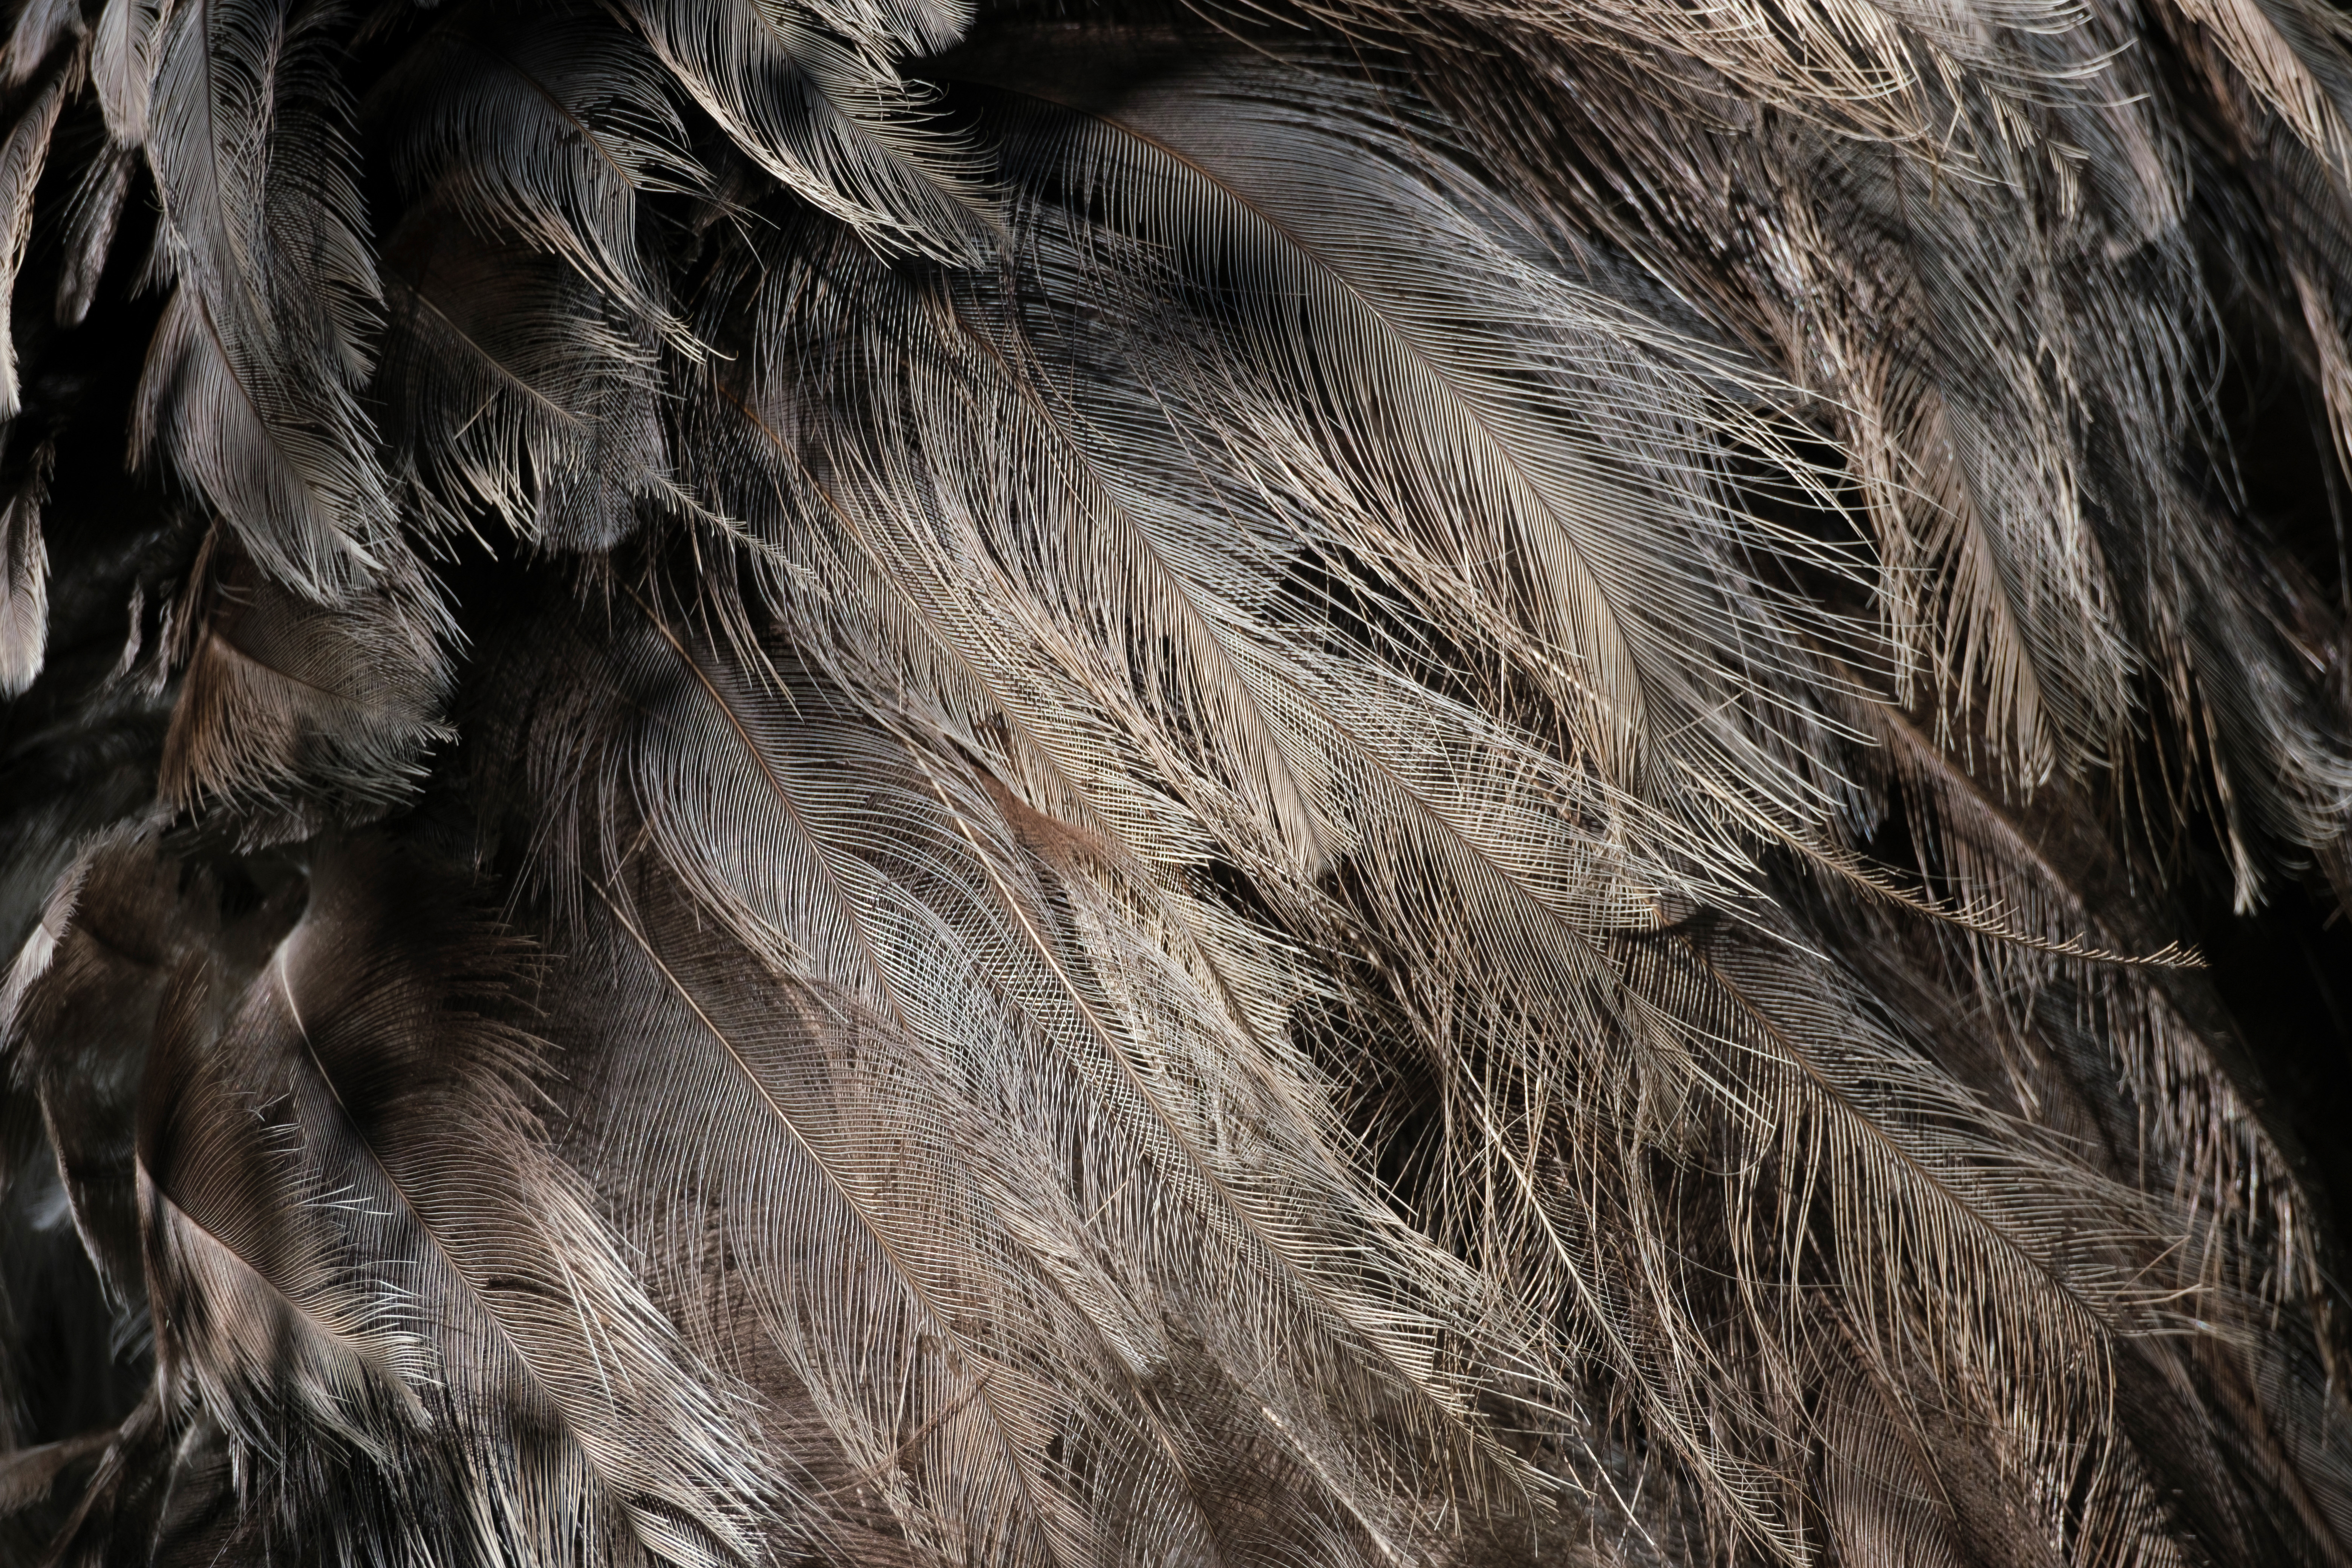 Feathers, photo (C) Angela Nicholson, X-S10, 1/800s, f/7.1, ISO320, 502mm (753mm equivalent)